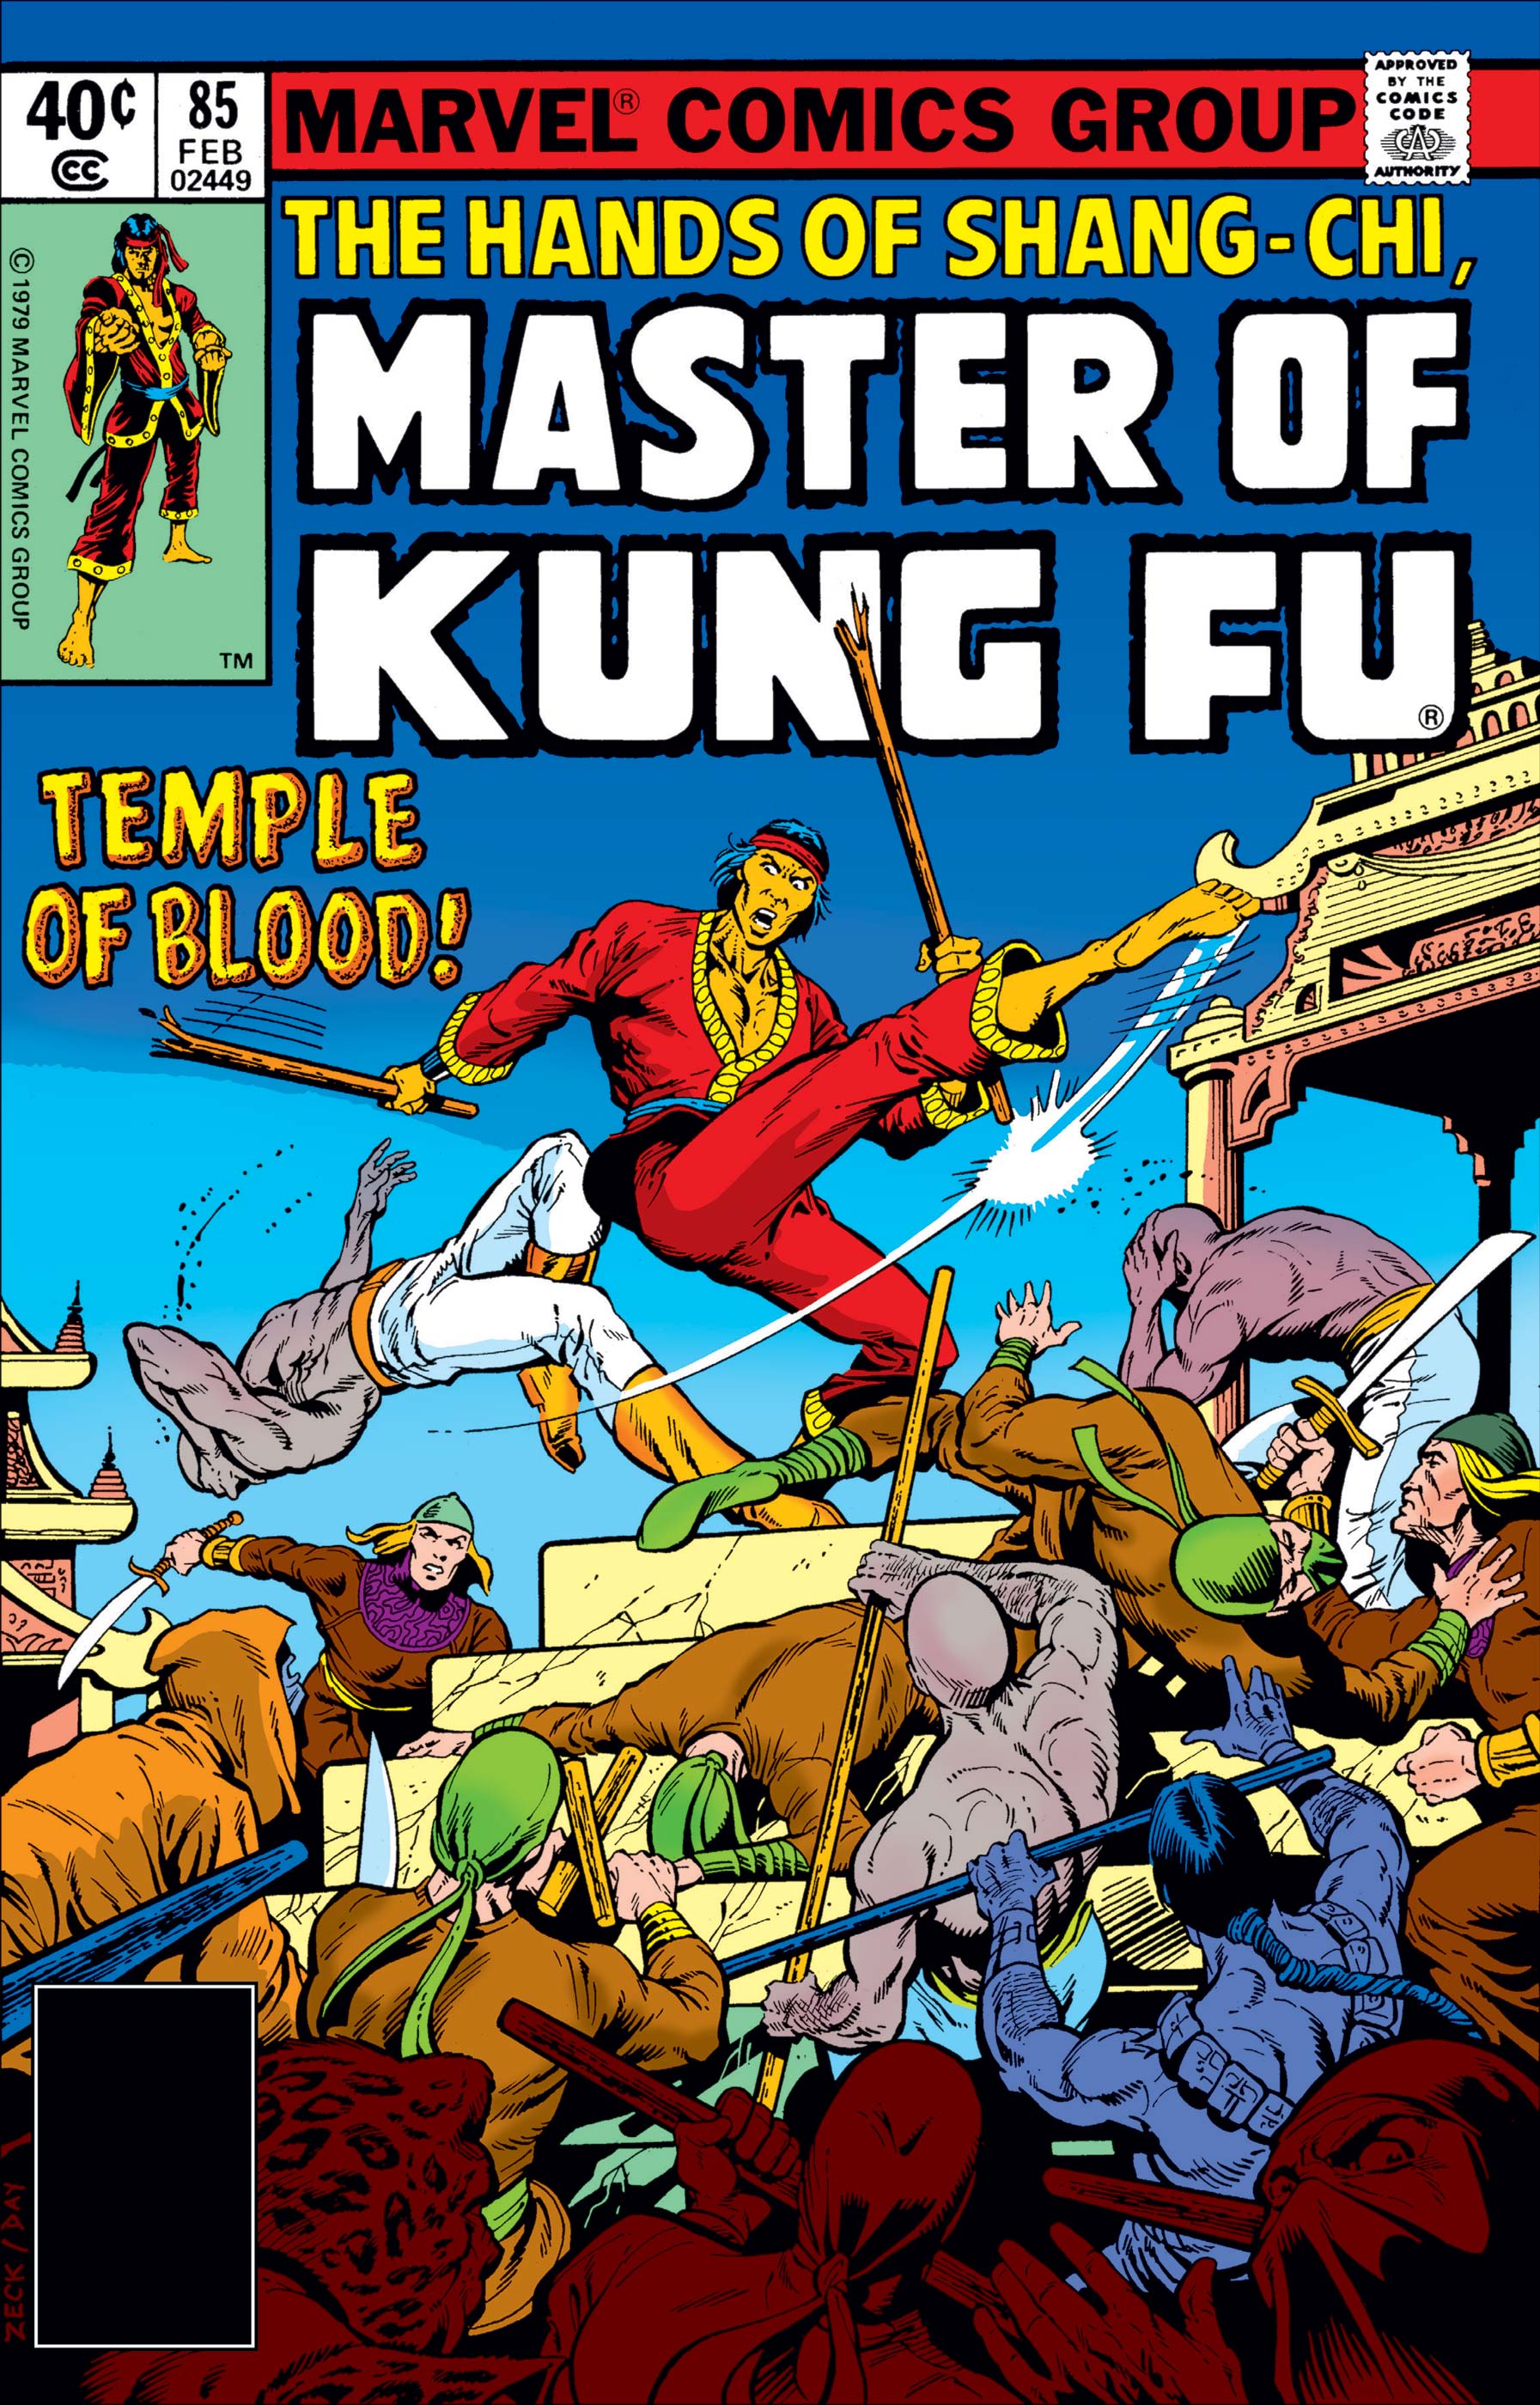 Master of Kung Fu (1974) #85